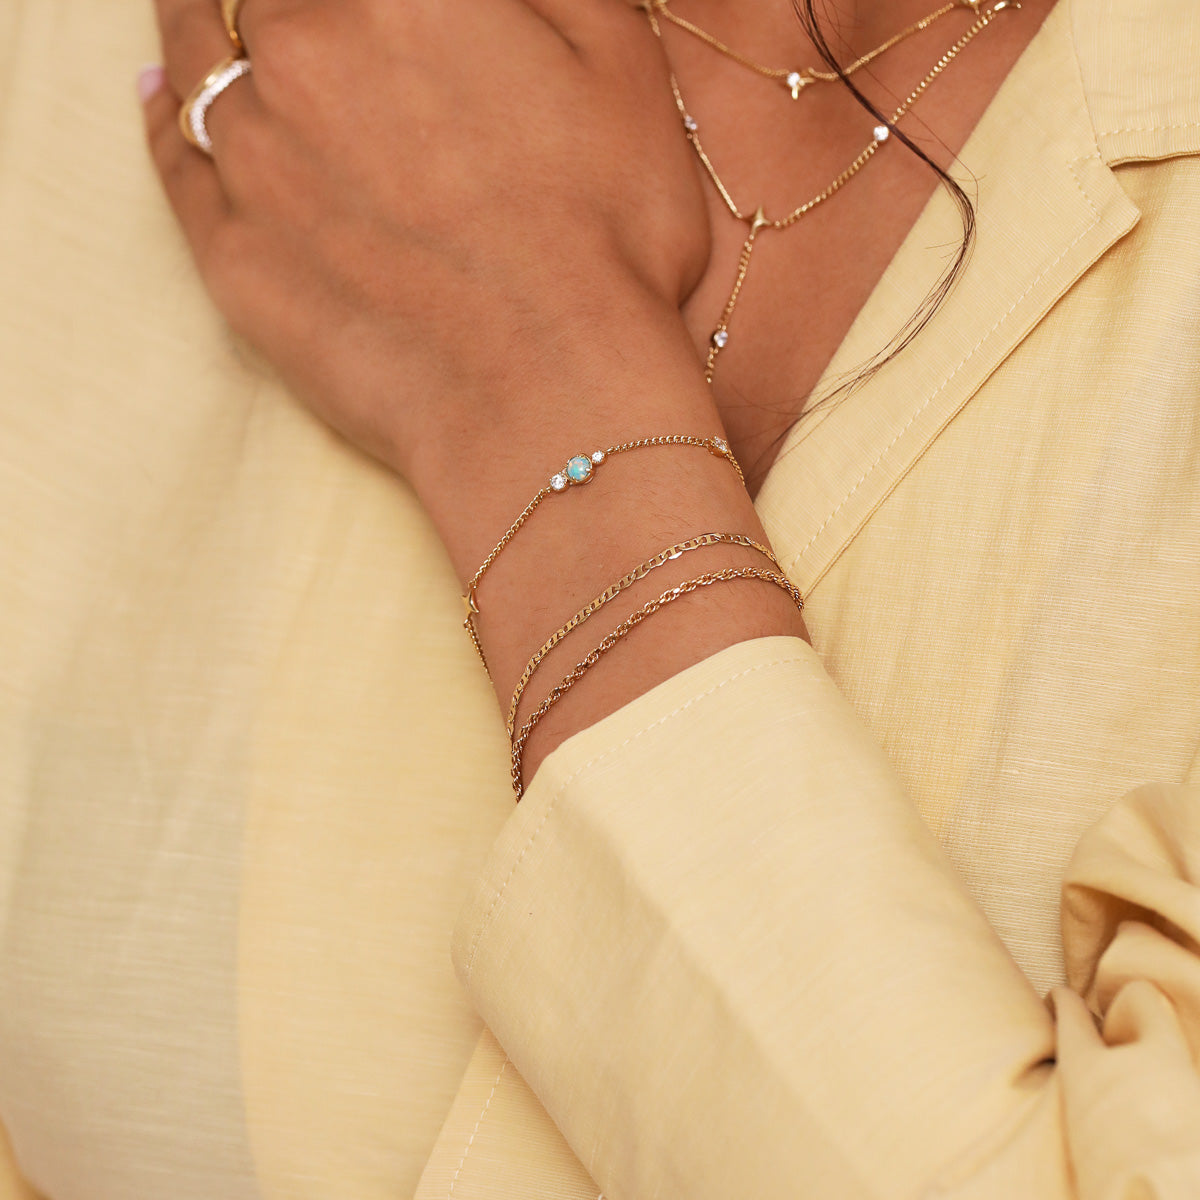 Cosmic Star Opal Bracelet in Gold worn stacked with bracelets